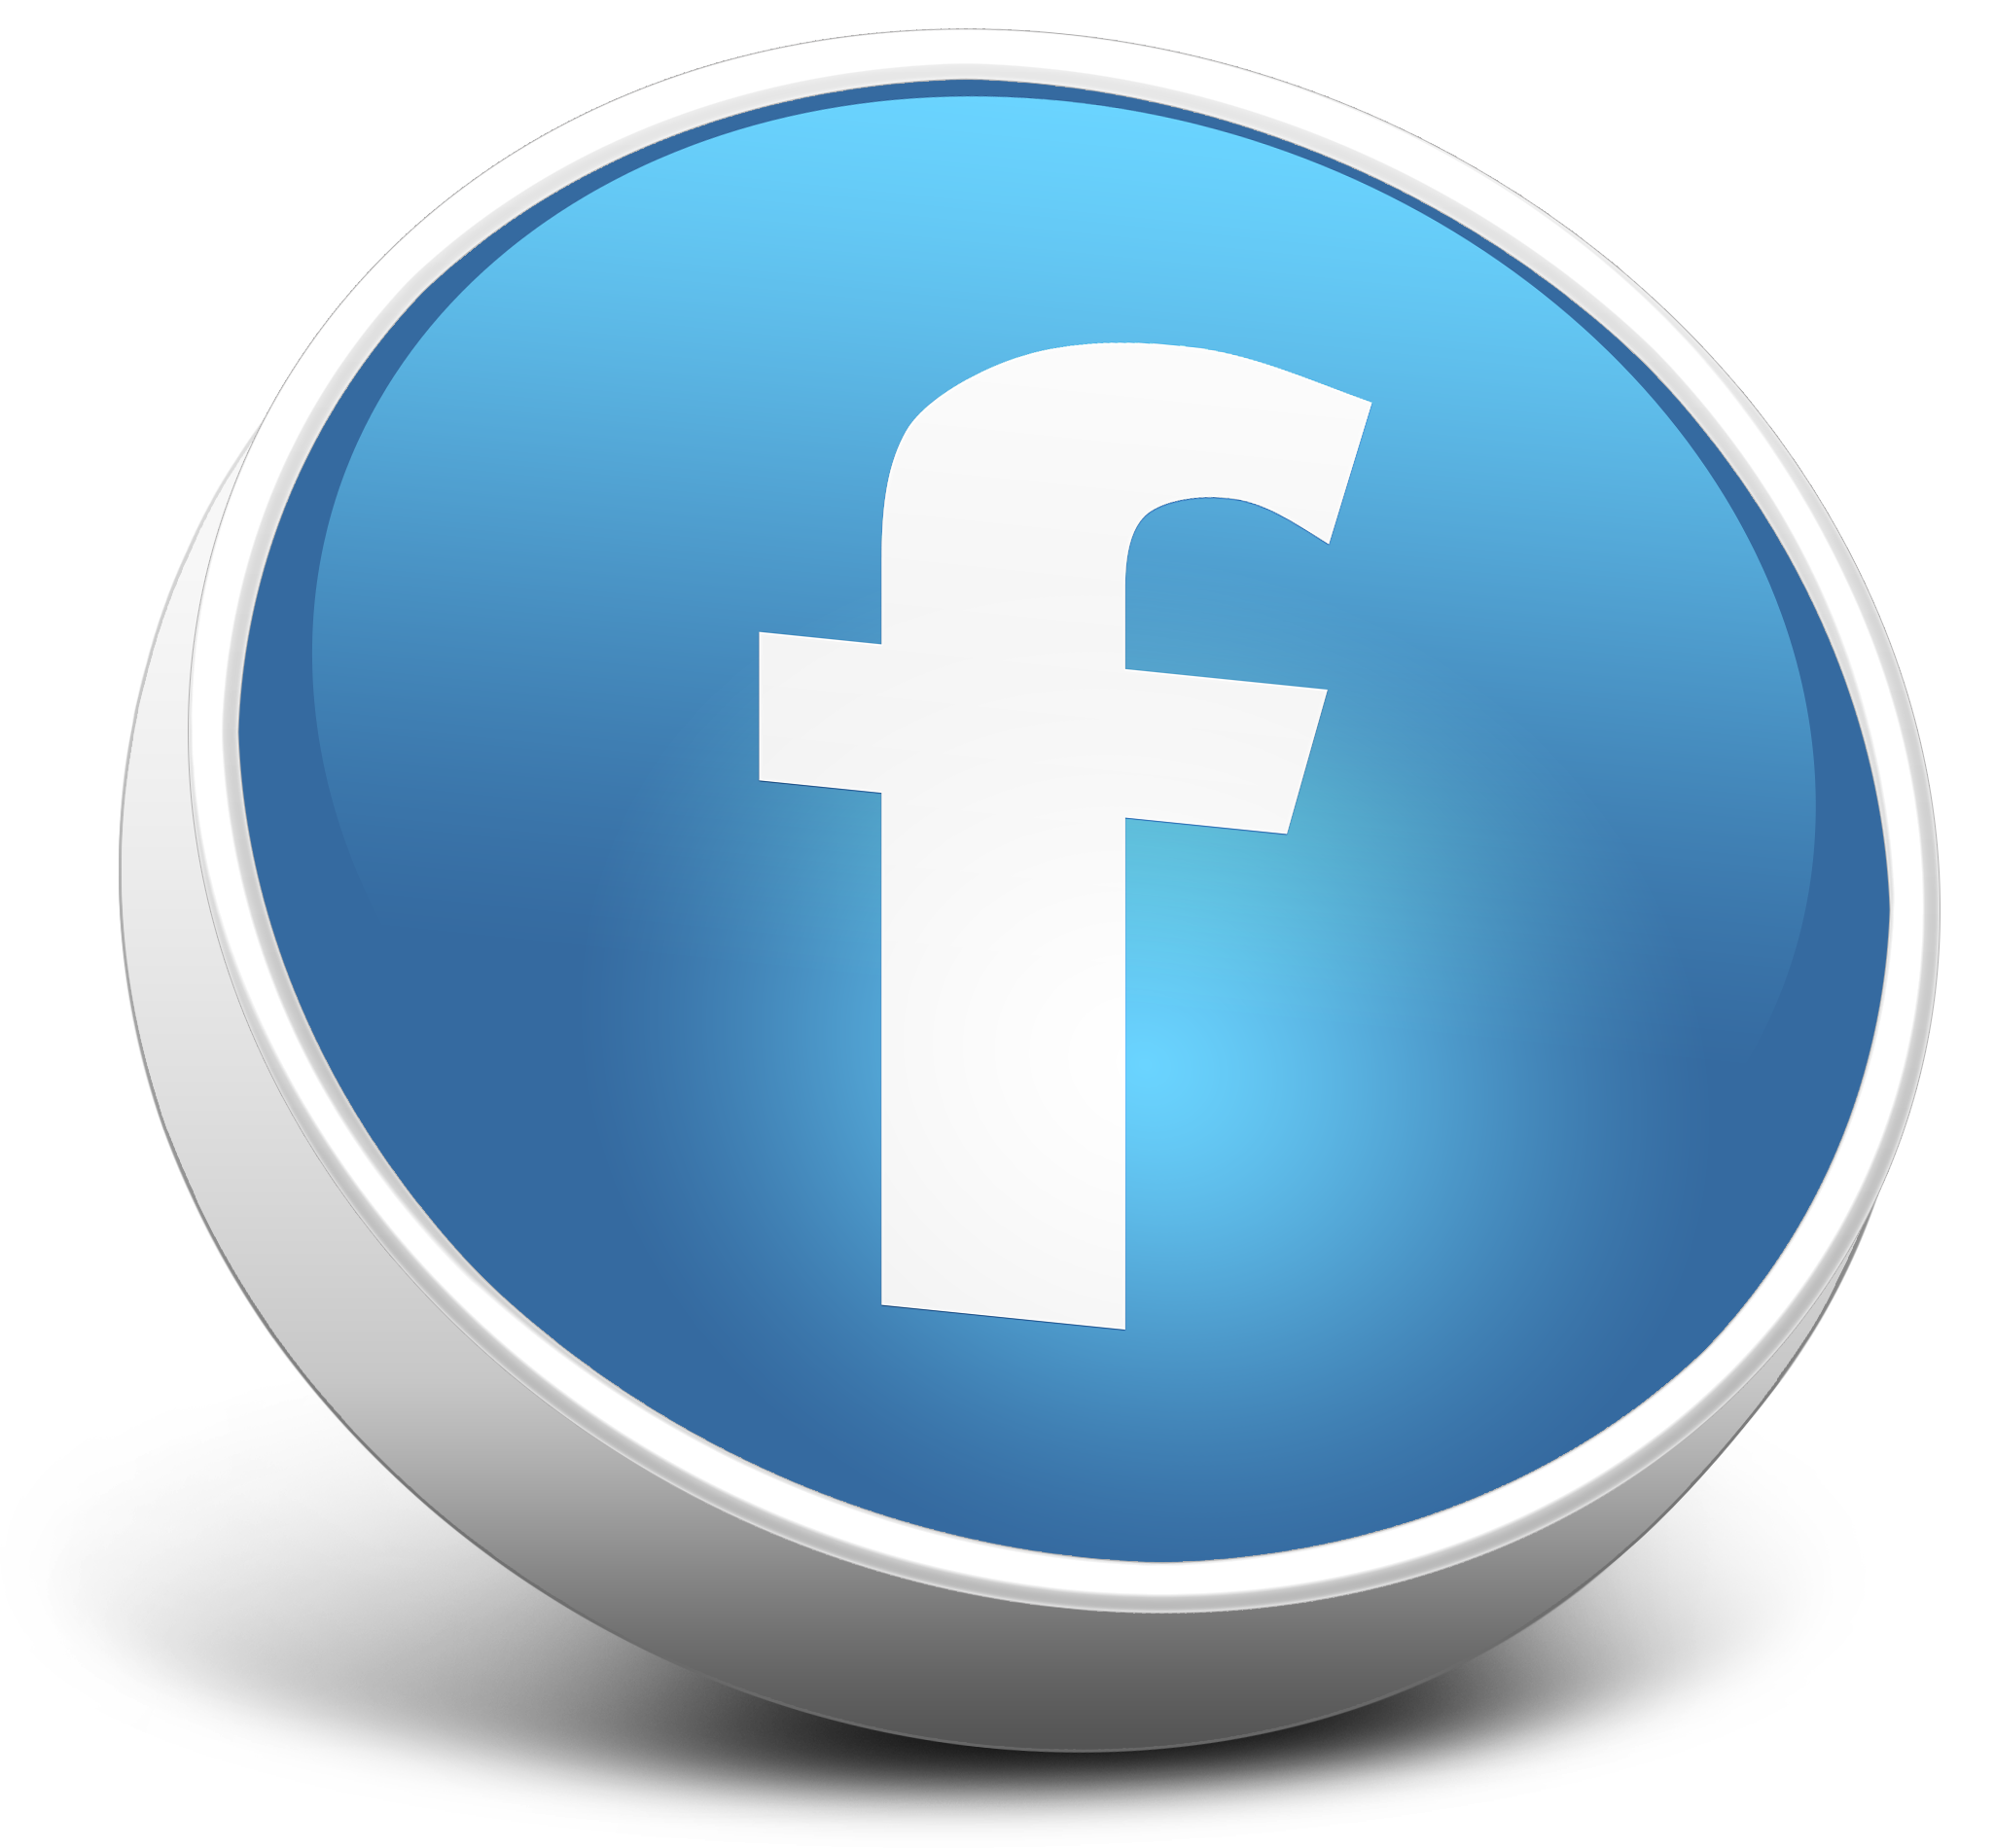 Download Free Icons Wallpaper Desktop Fb Computer Facebook Logo ICON